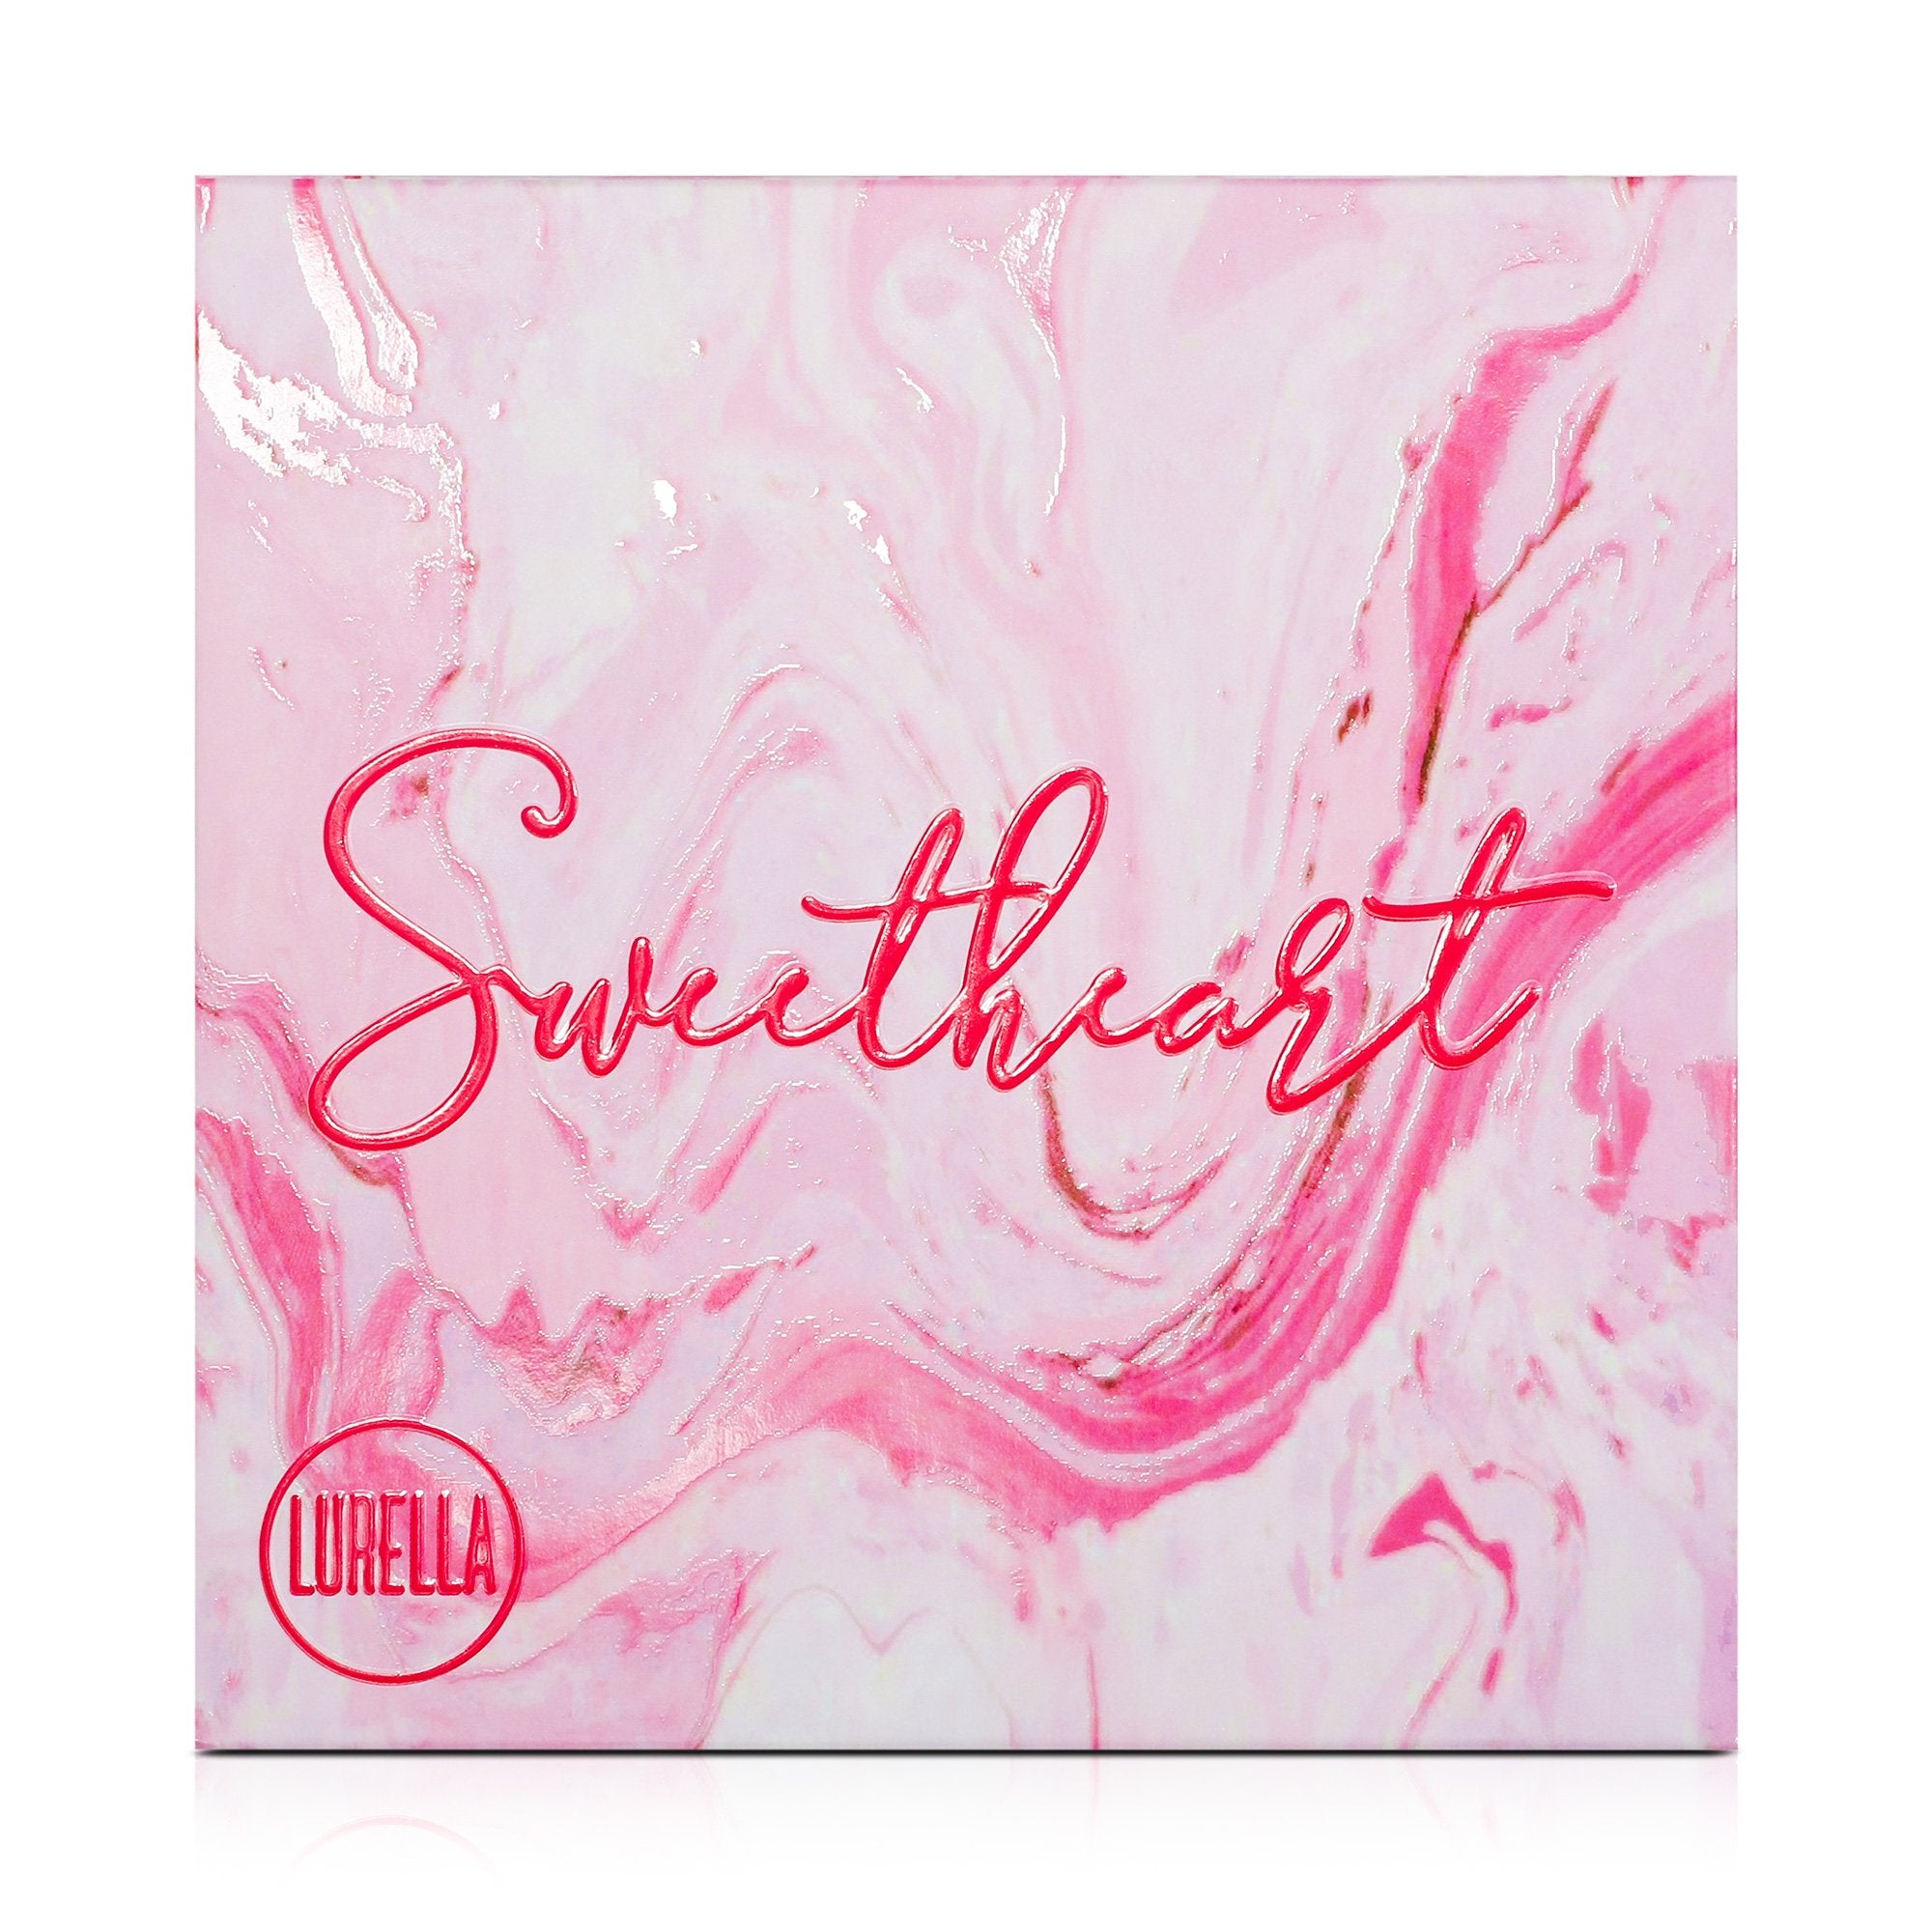 Lurella Cosmetics - Sweetheart Palette